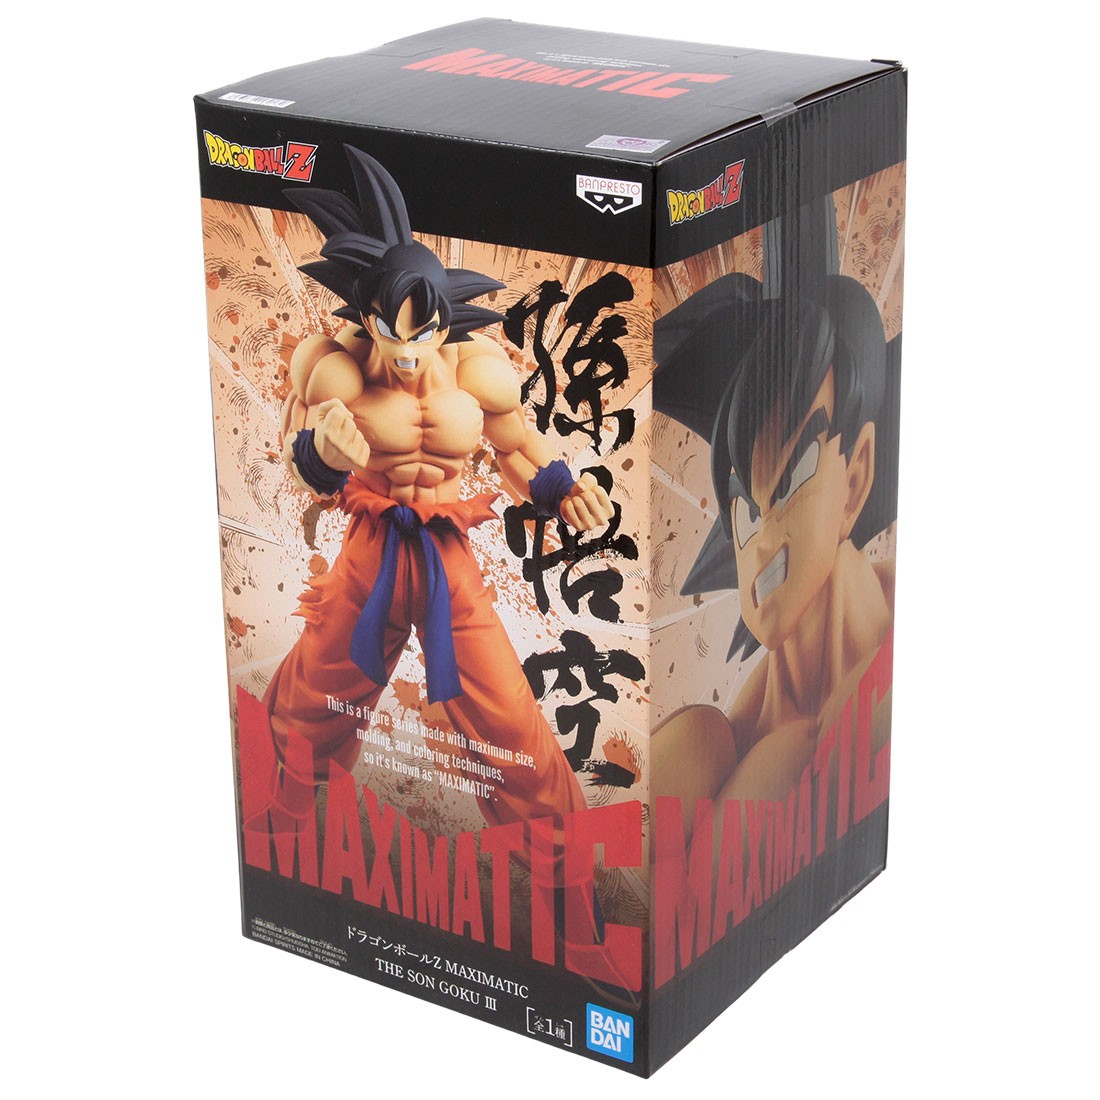 Banpresto Dragon Ball Z Maximatic The Son Goku Vol. 3 Figure black